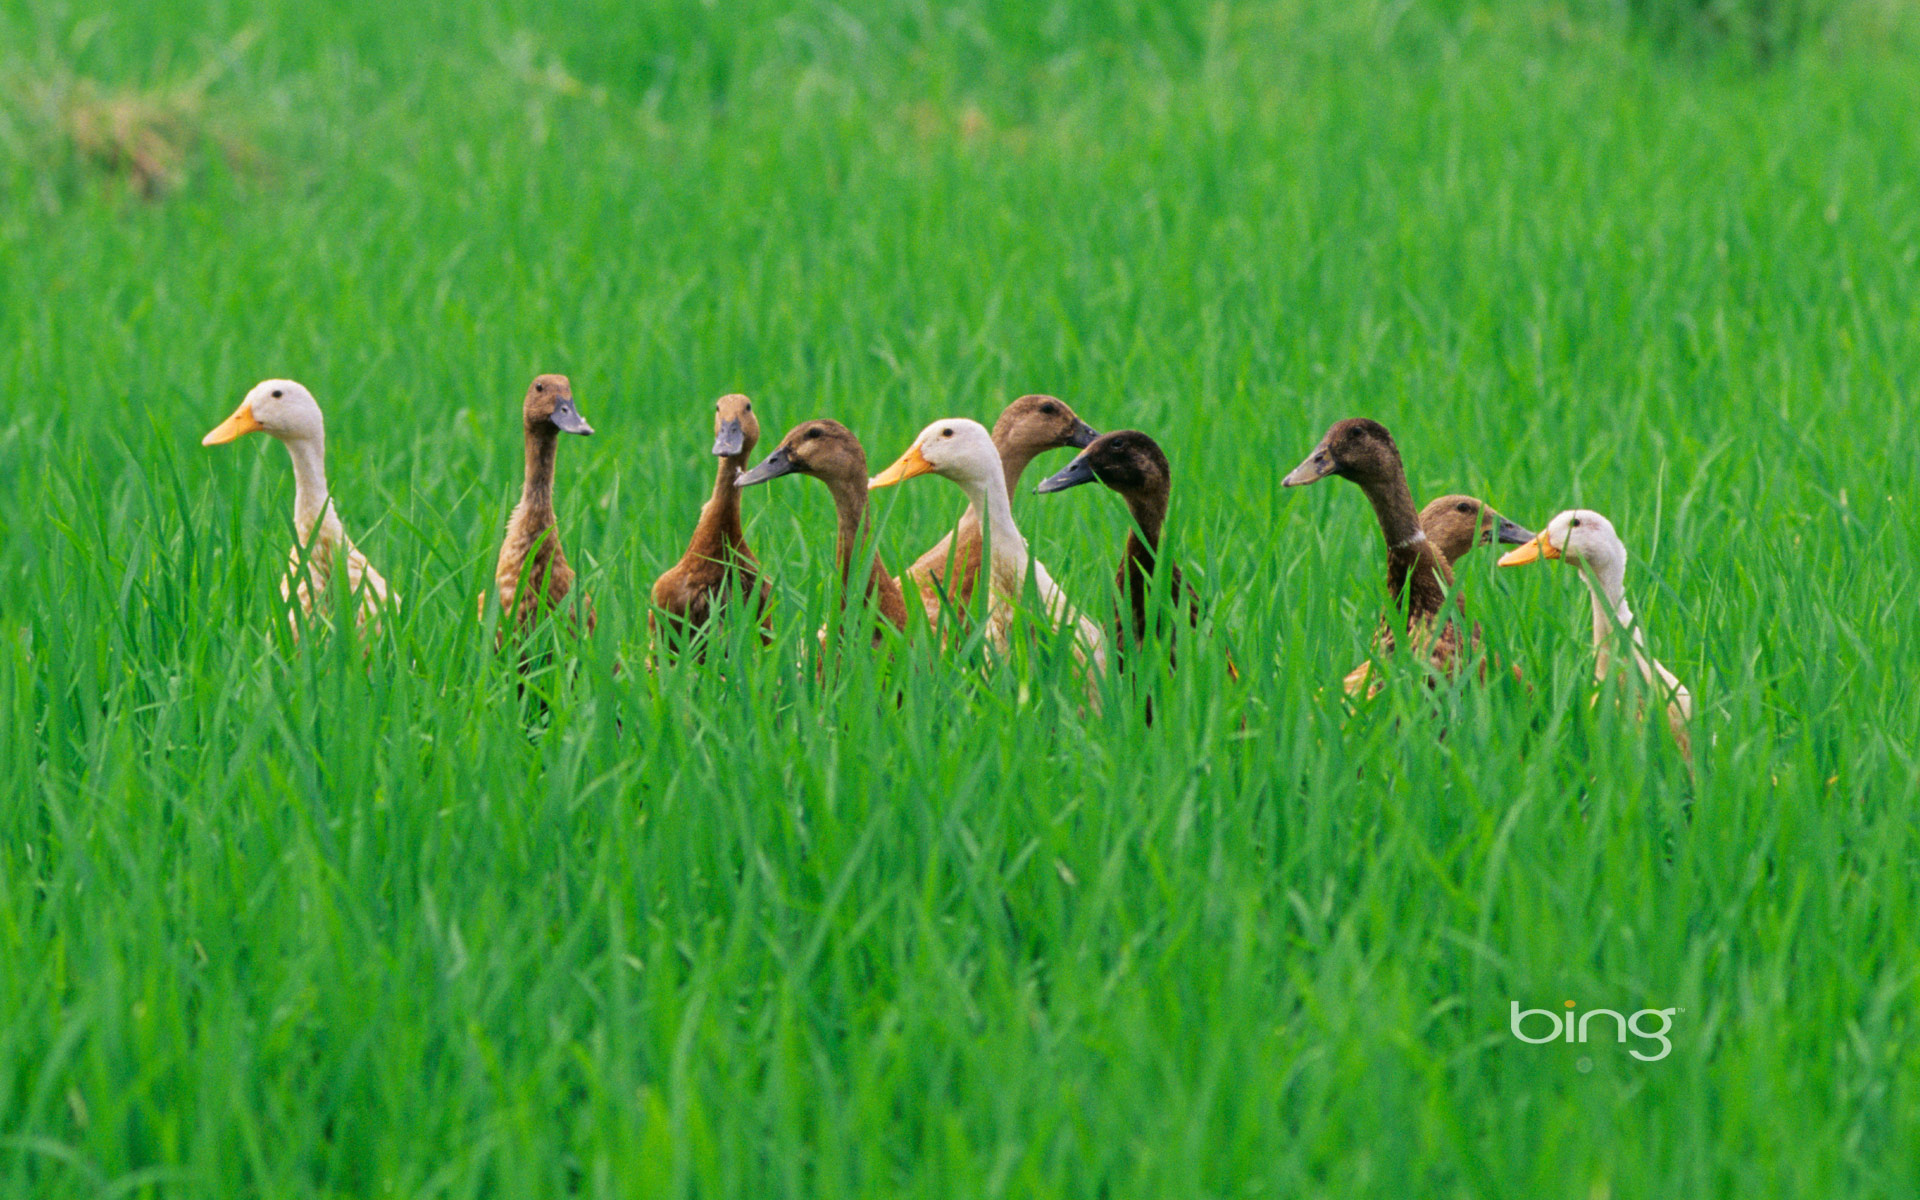 Ducks in a rice field near Ubud, Bali, Indonesia